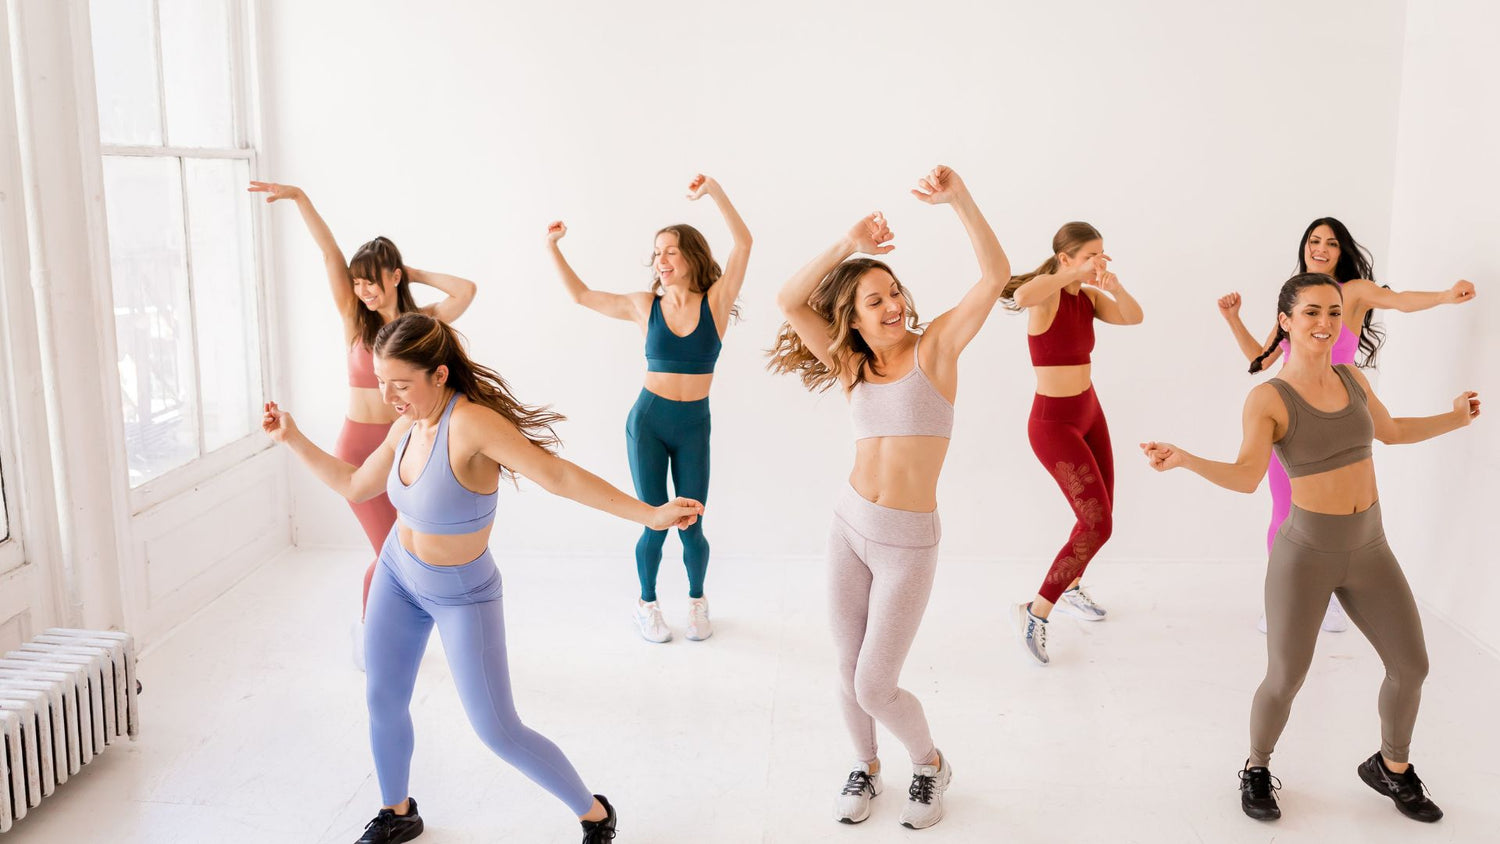 DanceBody Dance Workout Classes NYC, Miami, Hamptons, LA